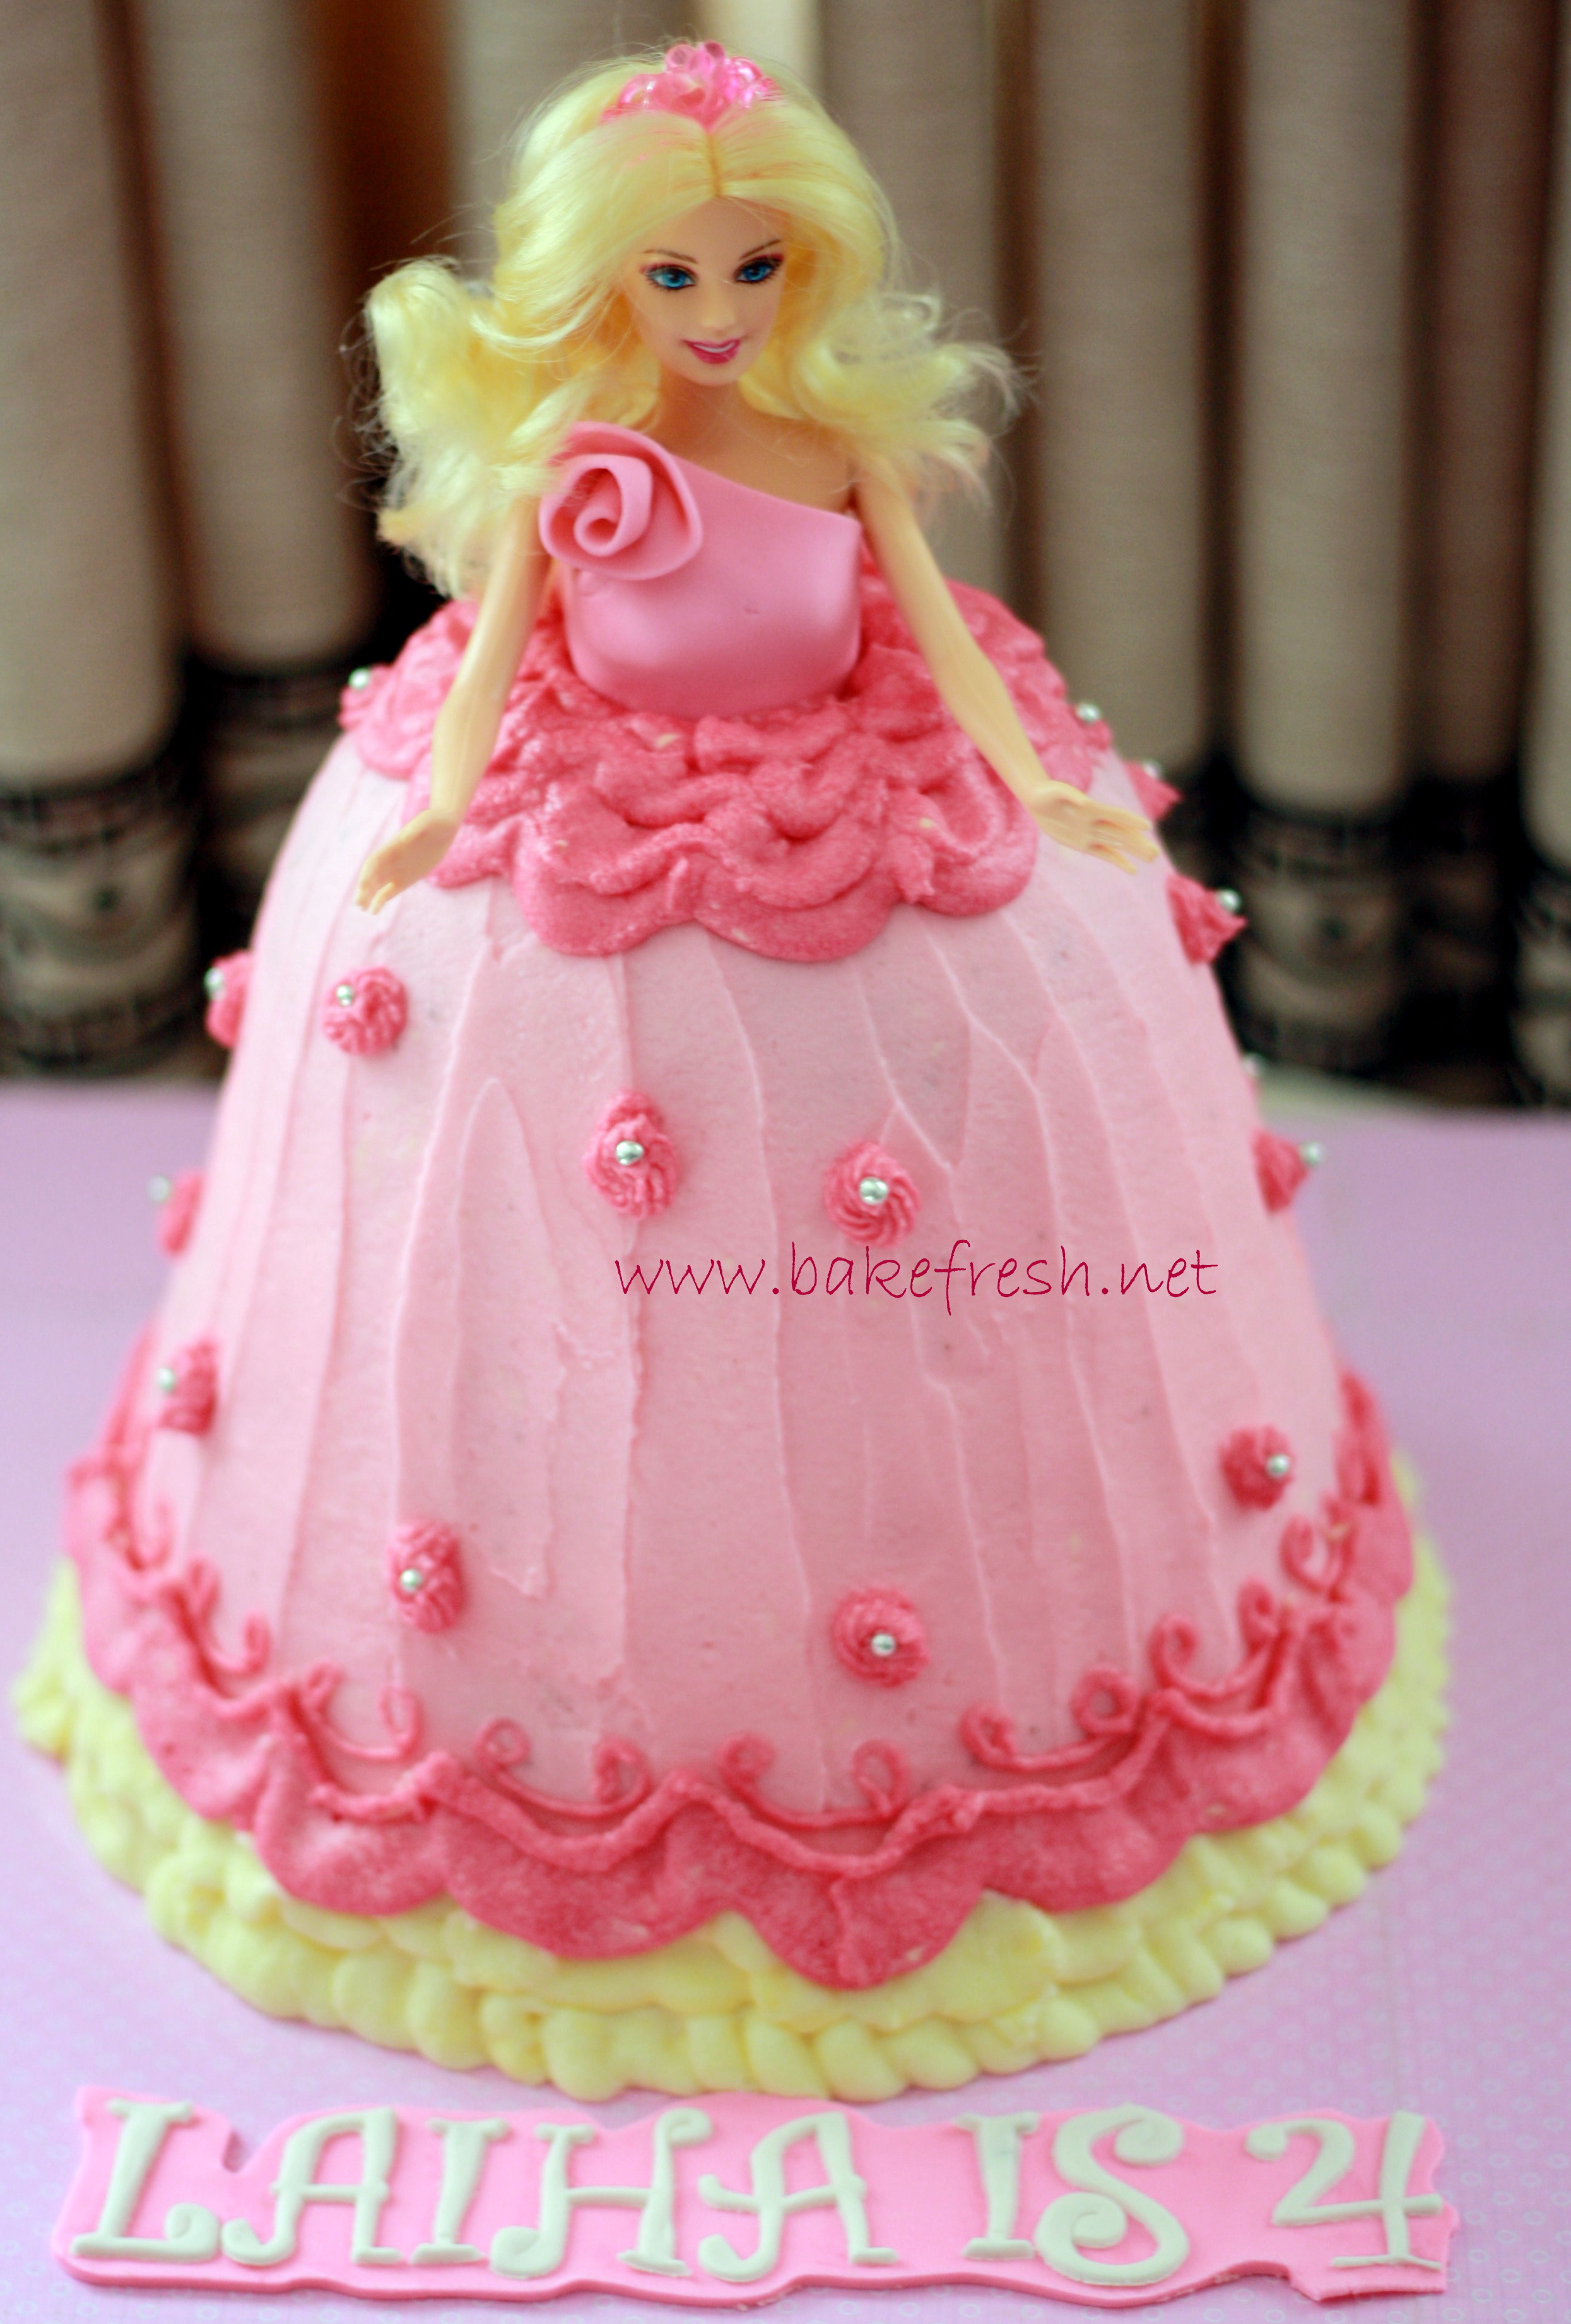 Cake decorating - Cake